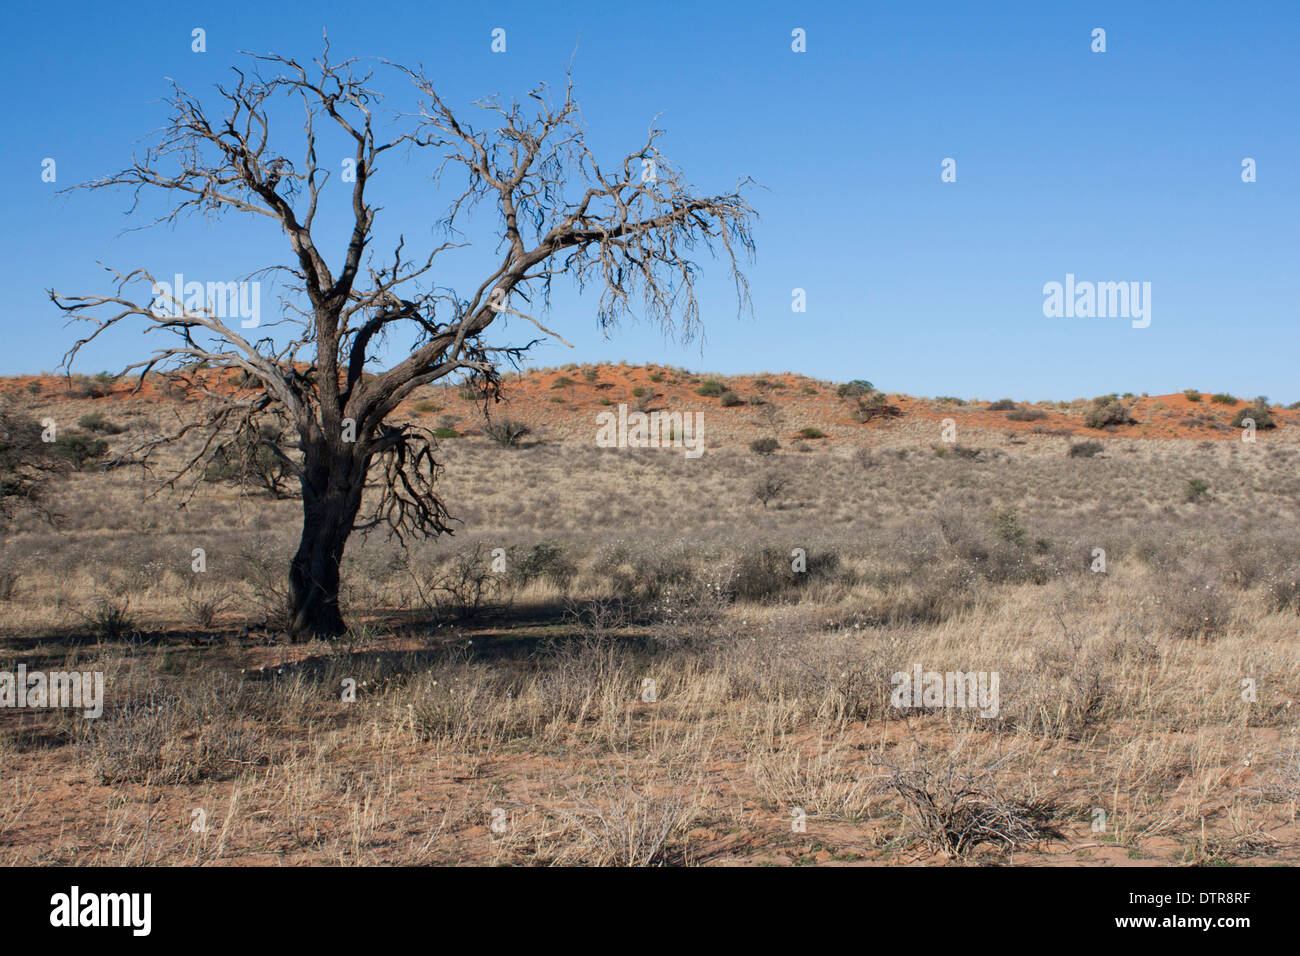 Kalahari desert landscape. November Stock Photo